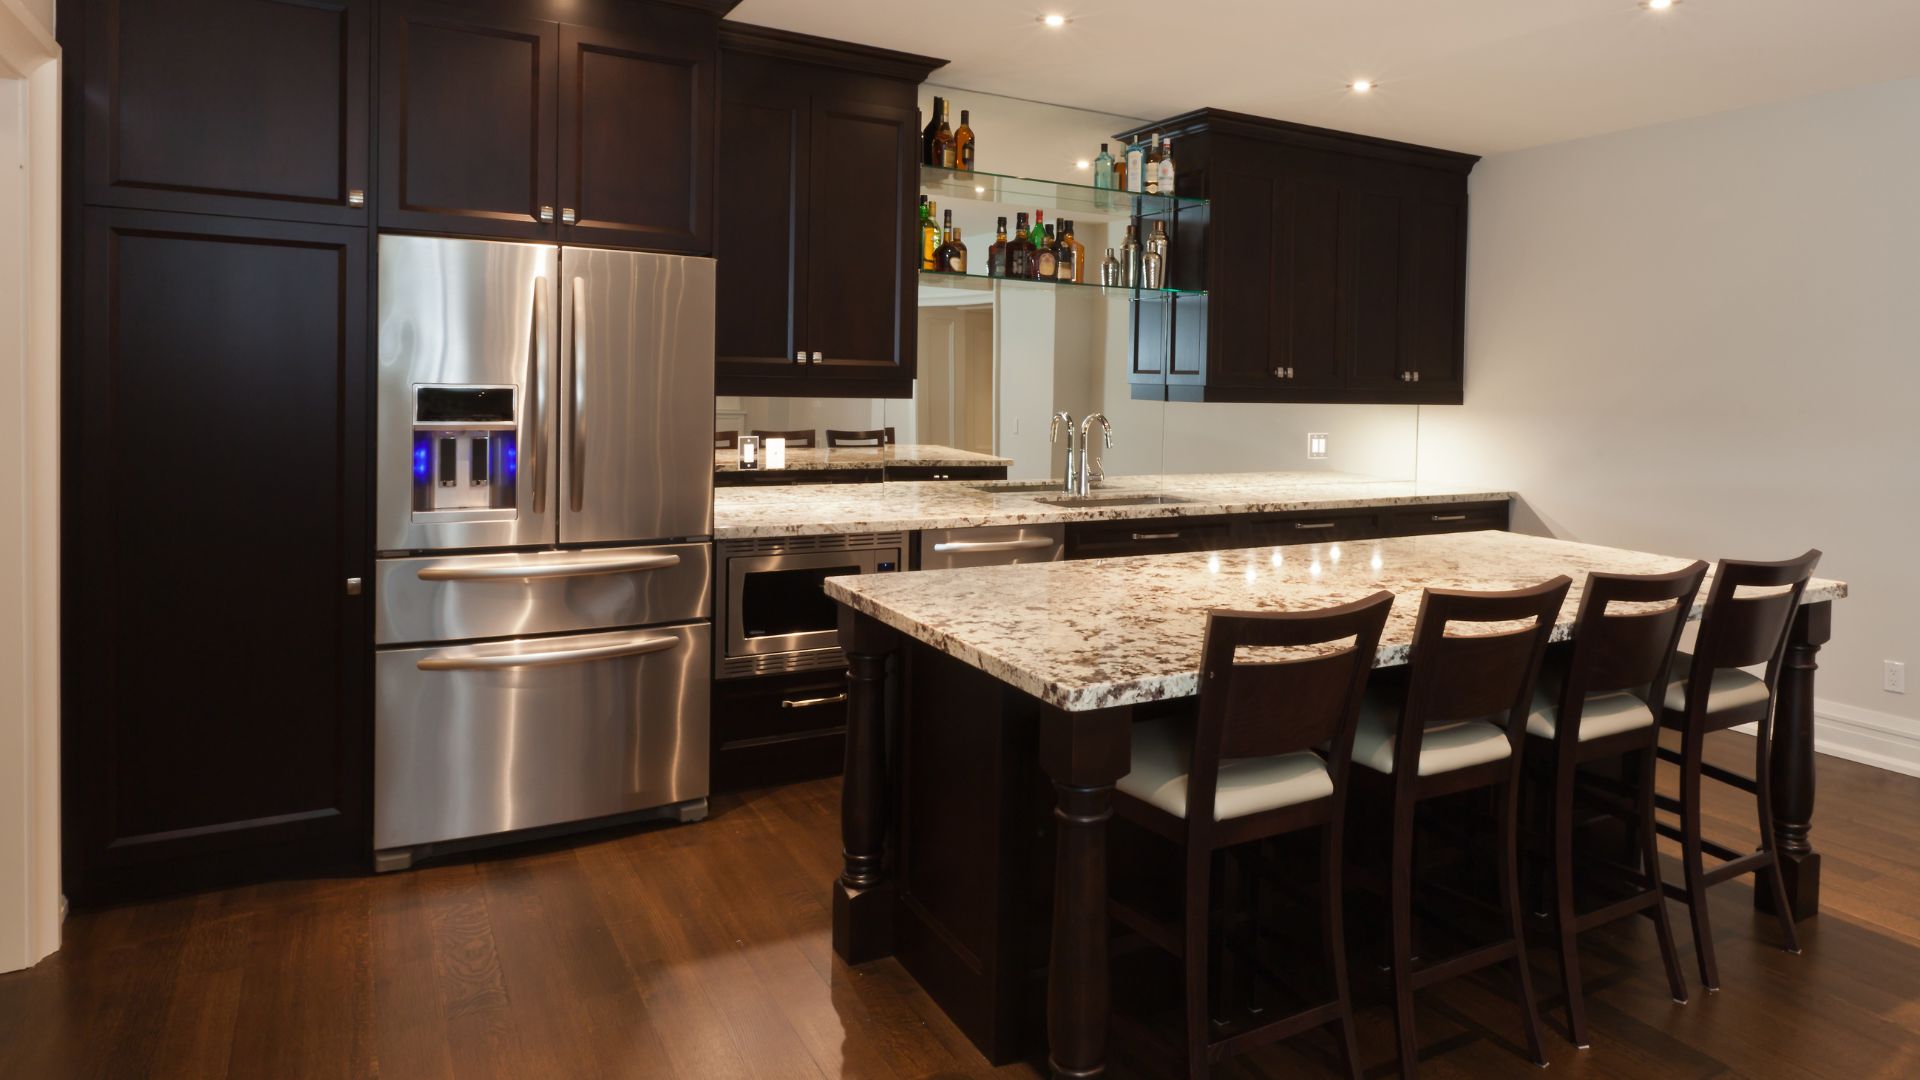 Luxury basement kitchen style in dark brown cabinets and granite countertop